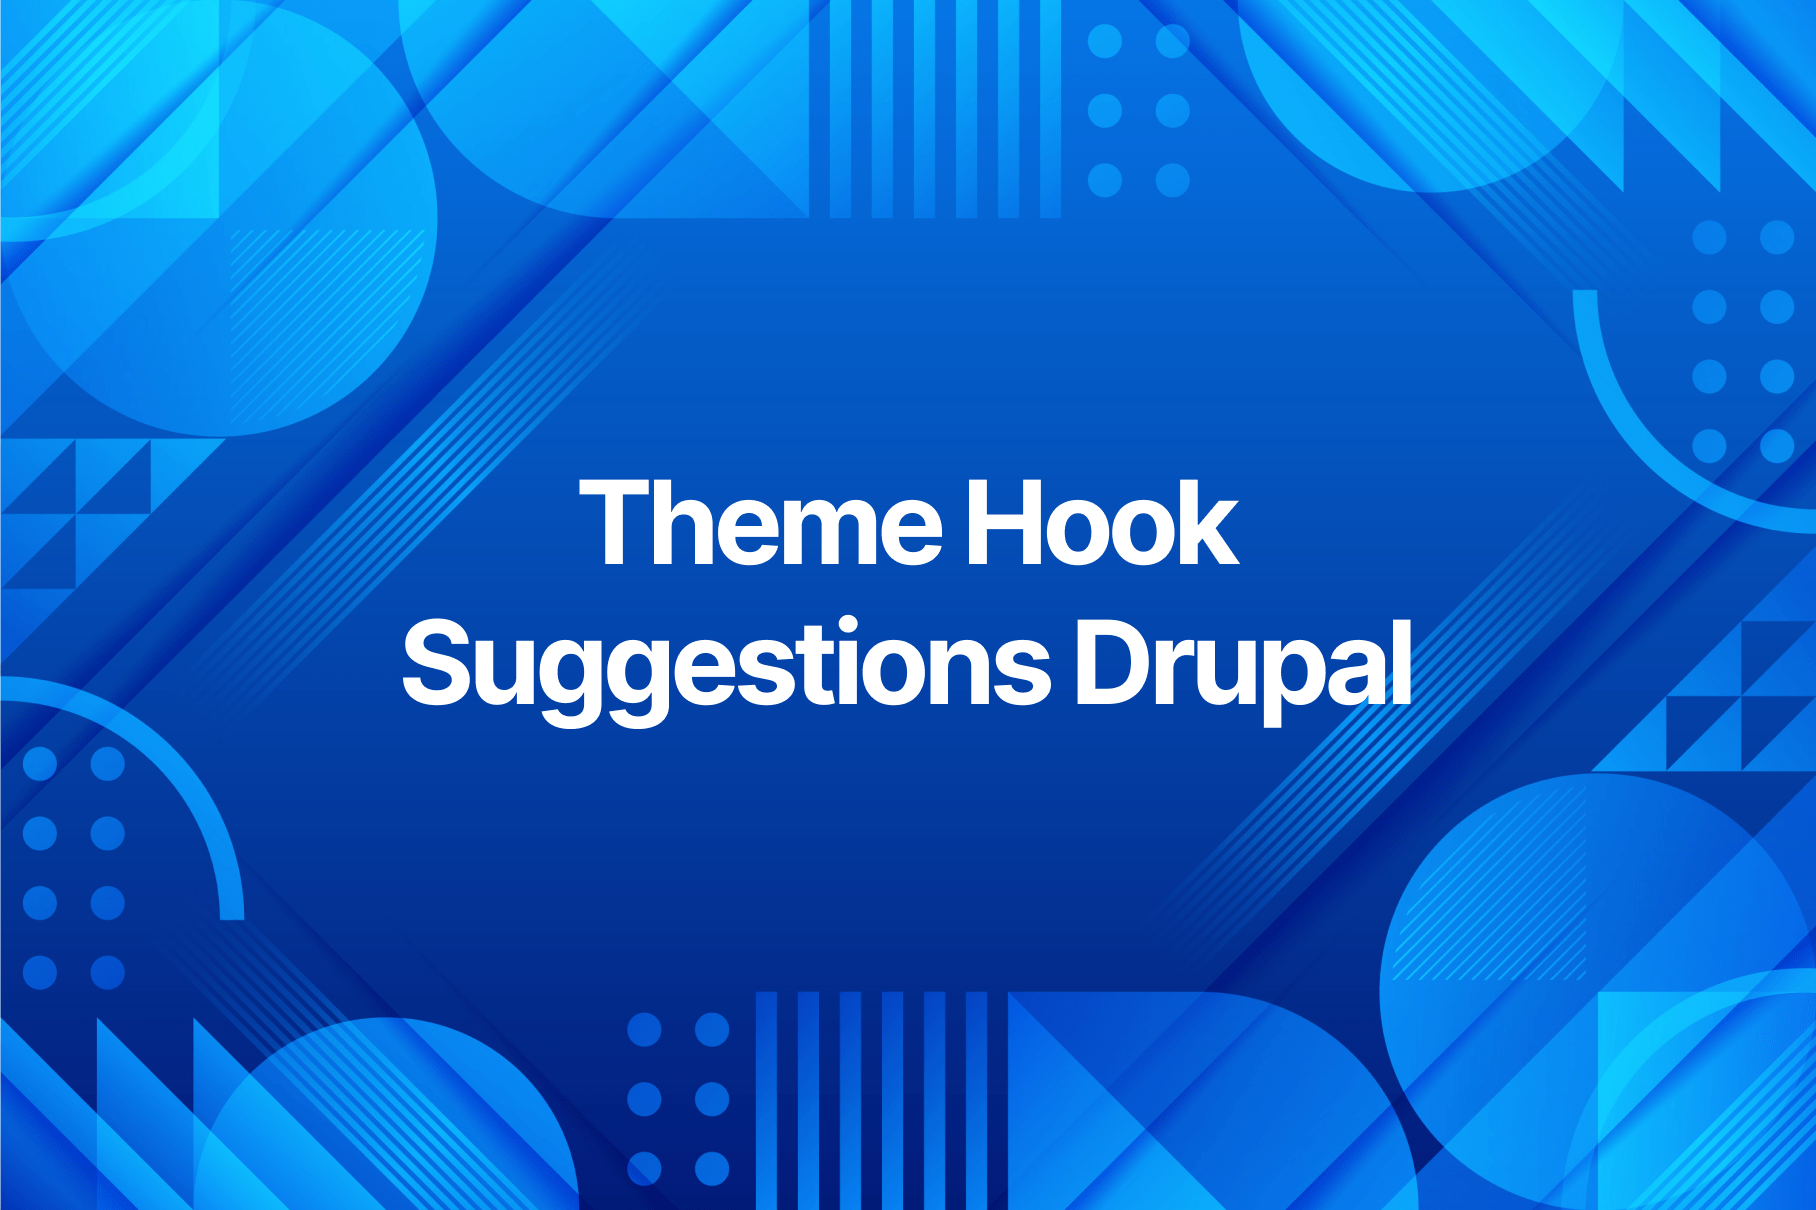 Theme Hook Suggestions Drupal image